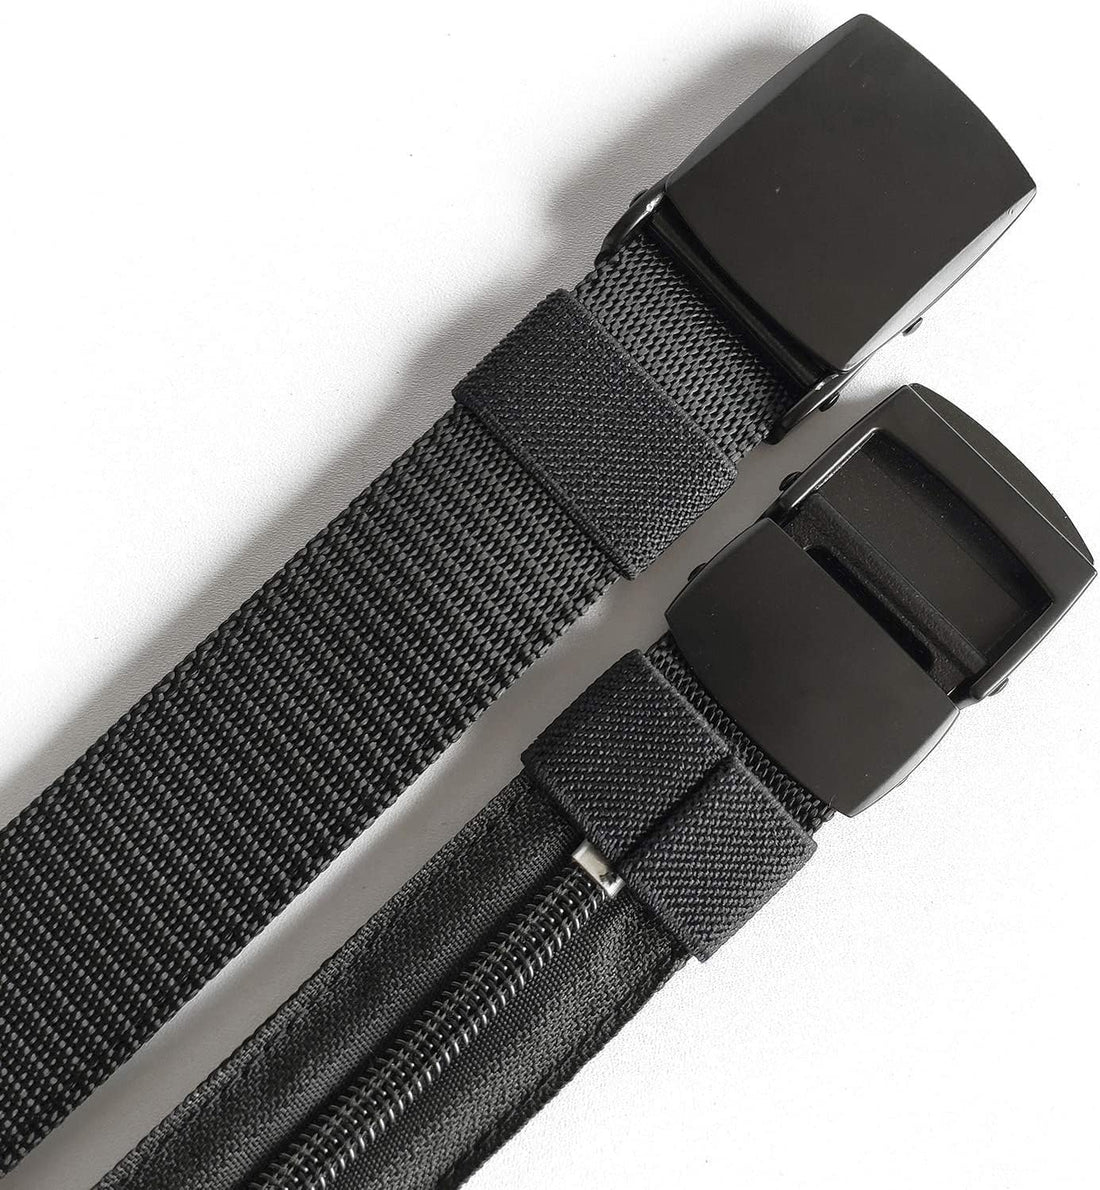 Rave Essentials Co. Black / 120cm Secret Zipper Stash Belt